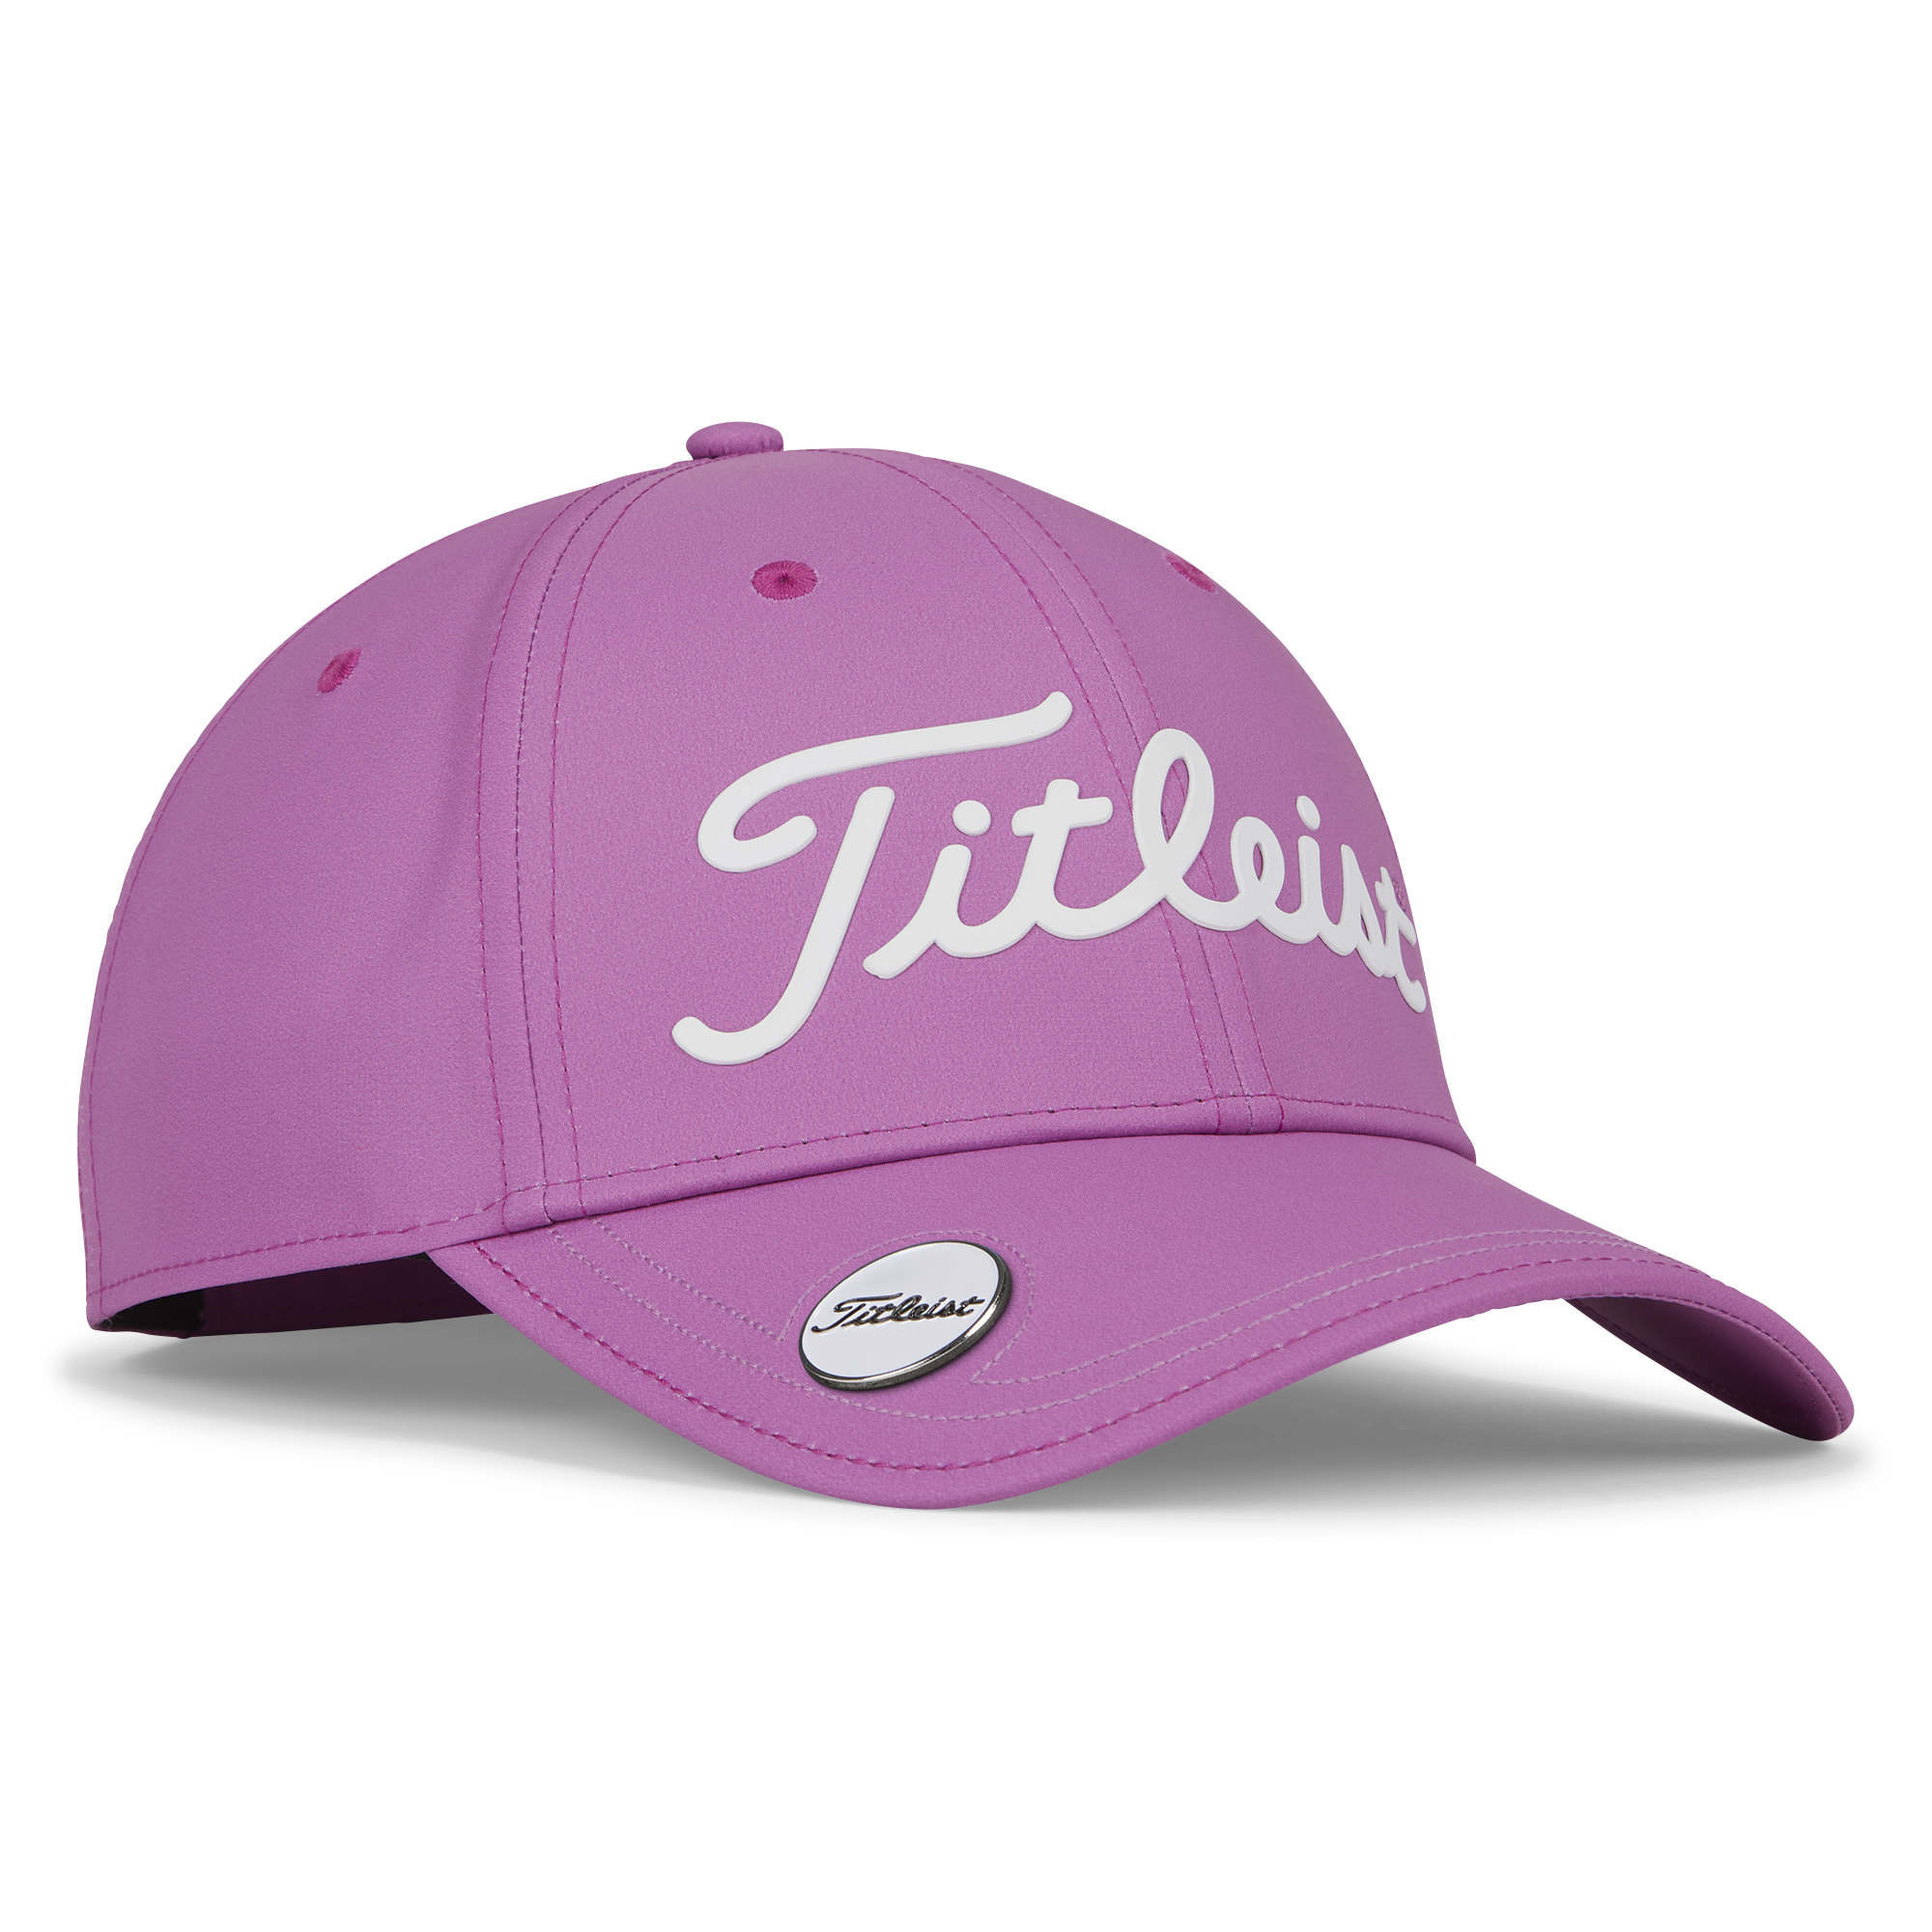 Titleist Players Performance Ball Marker golfová čepice, růžová/bílá